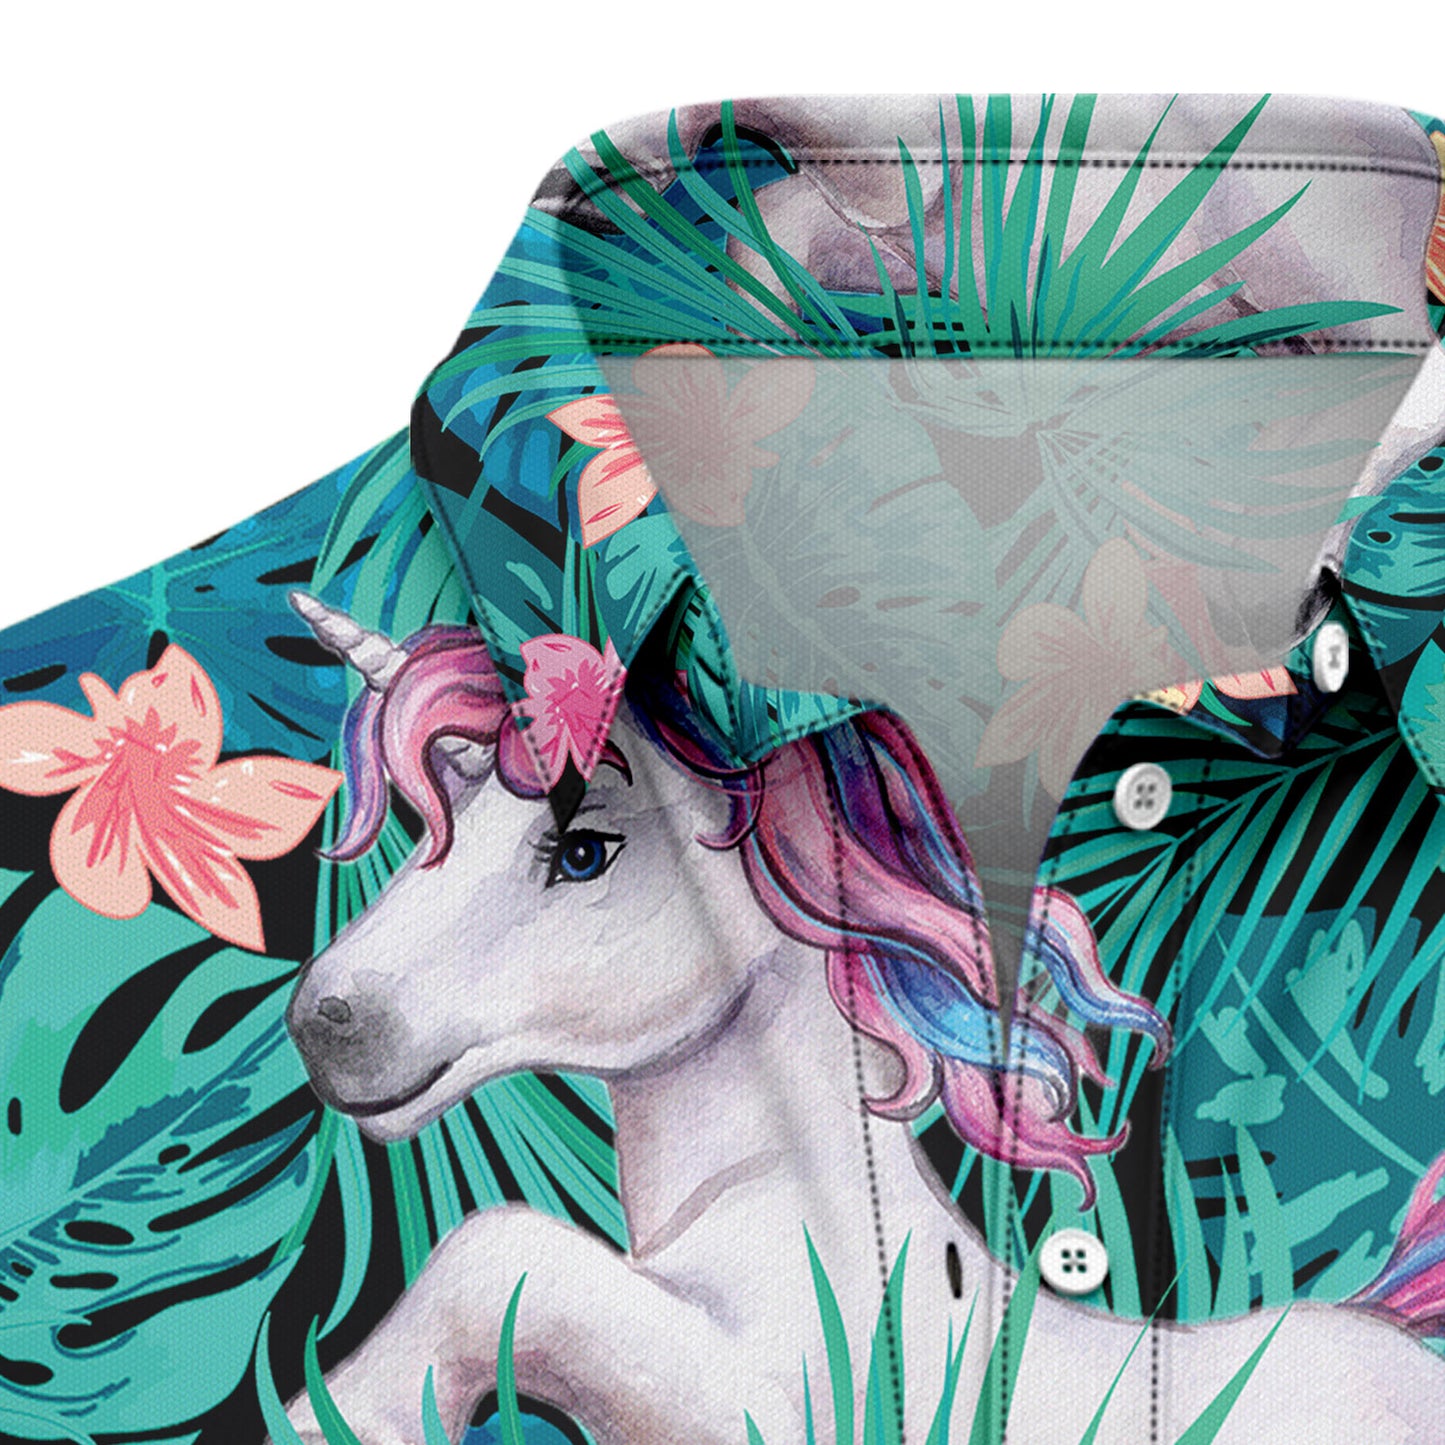 Unicorn Tropical T0607 Hawaiian Shirt